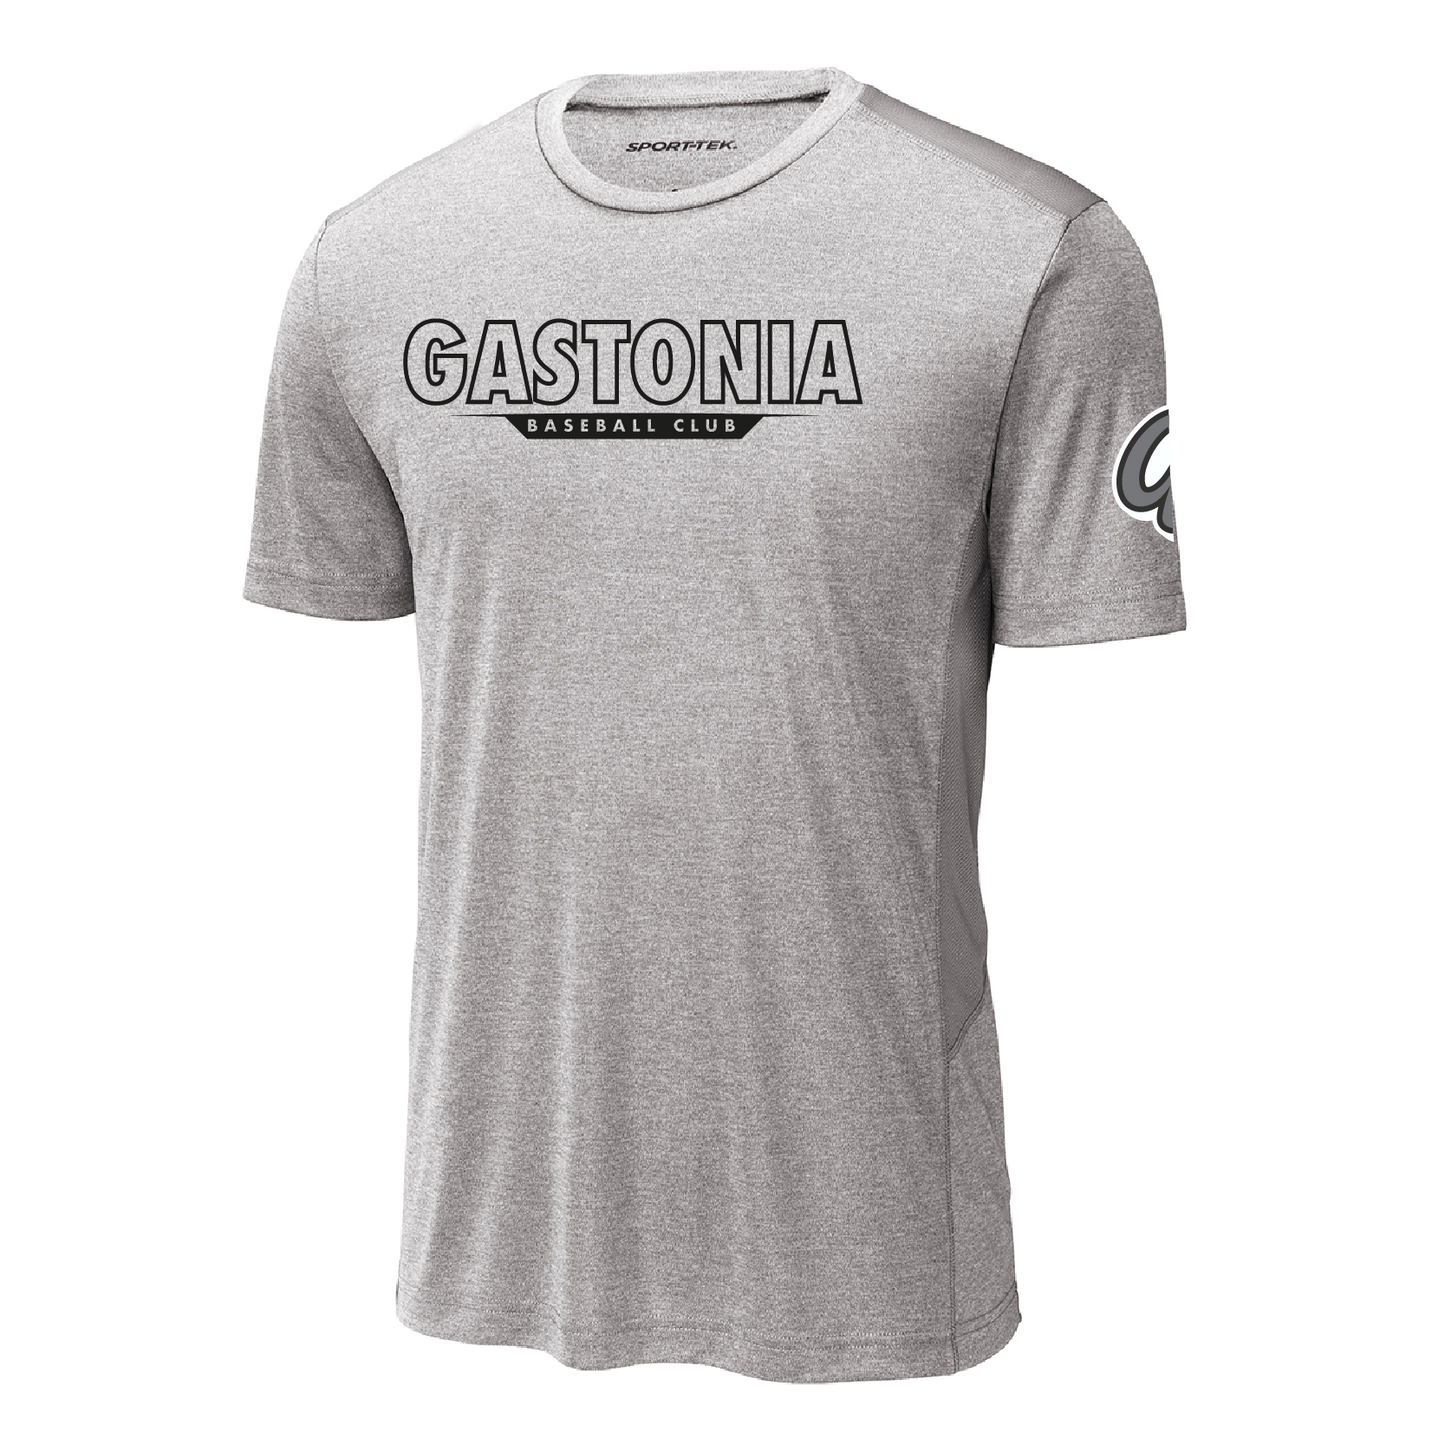 Gastonia Baseball Club Endeavor Tee